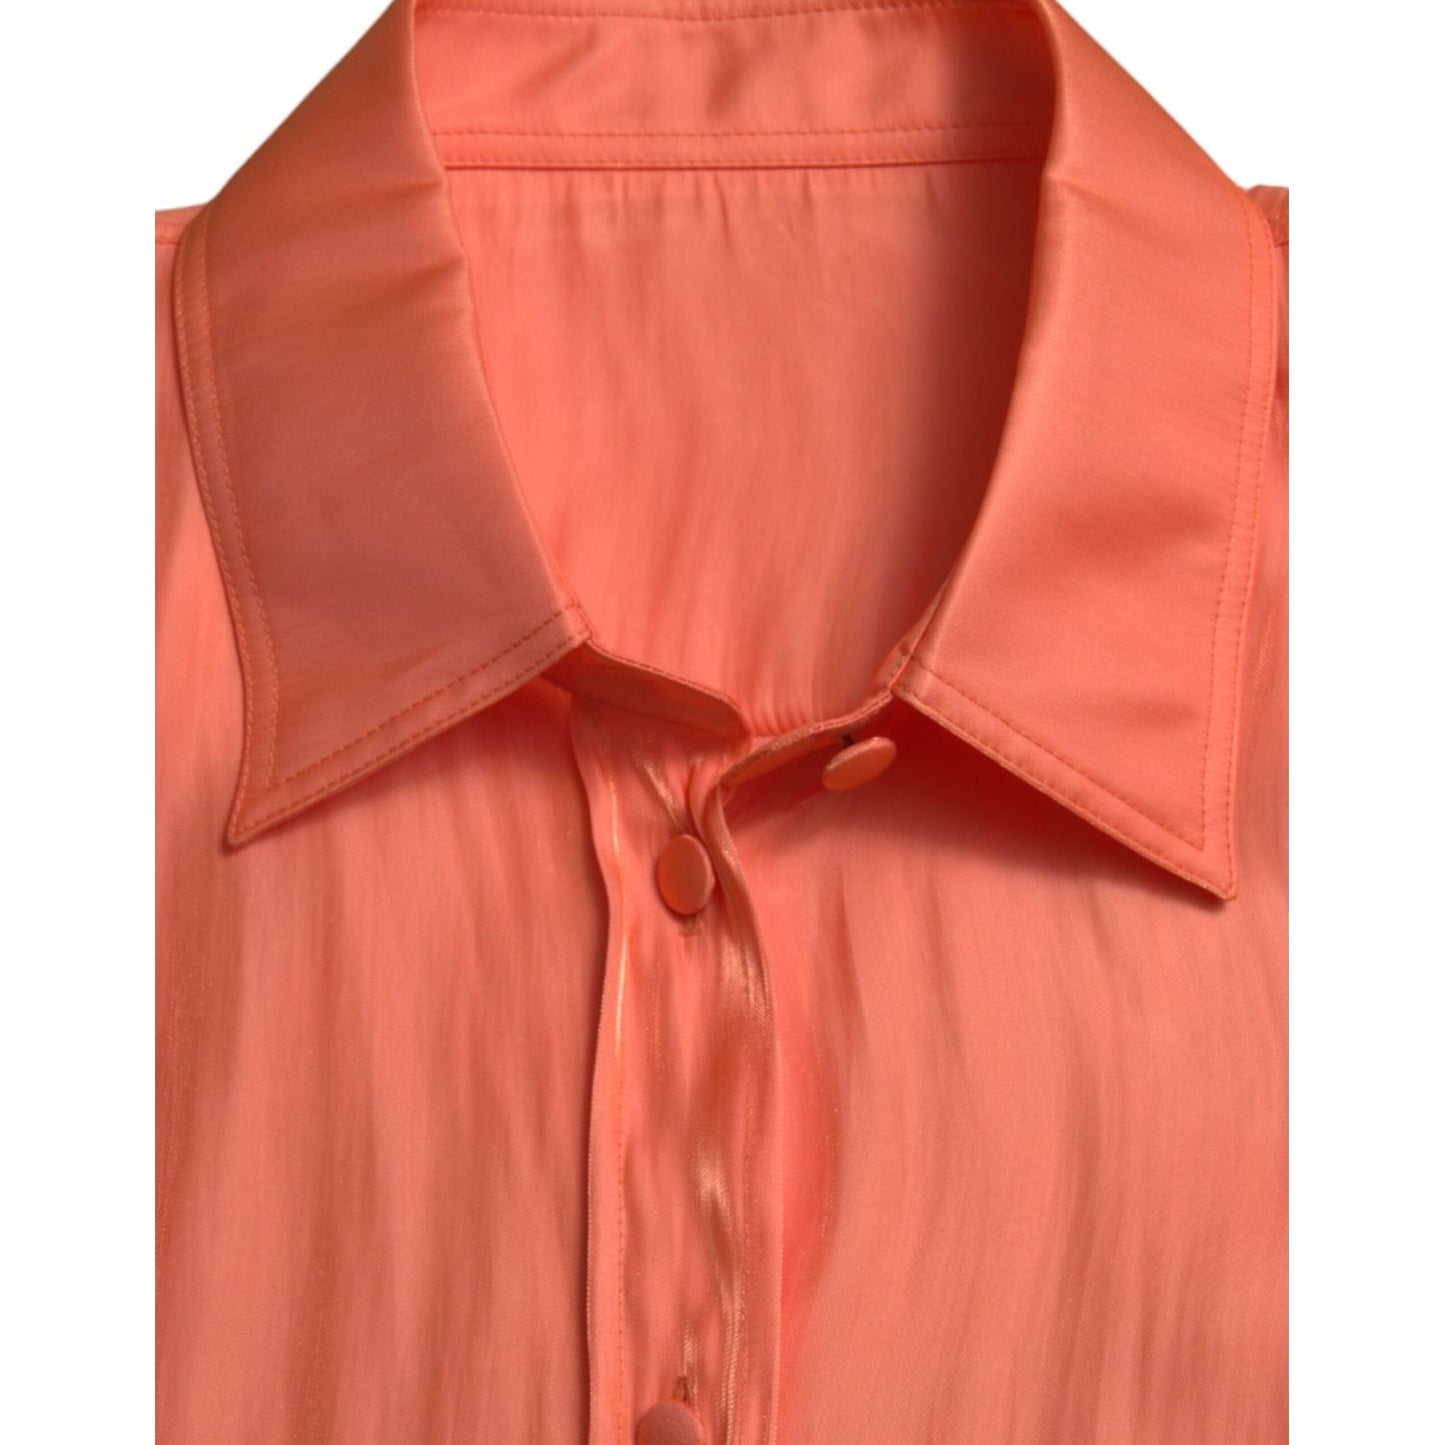 Dolce & Gabbana Elegant Coral Long Sleeve Polo Top peach-long-sleeve-button-down-blouse-top